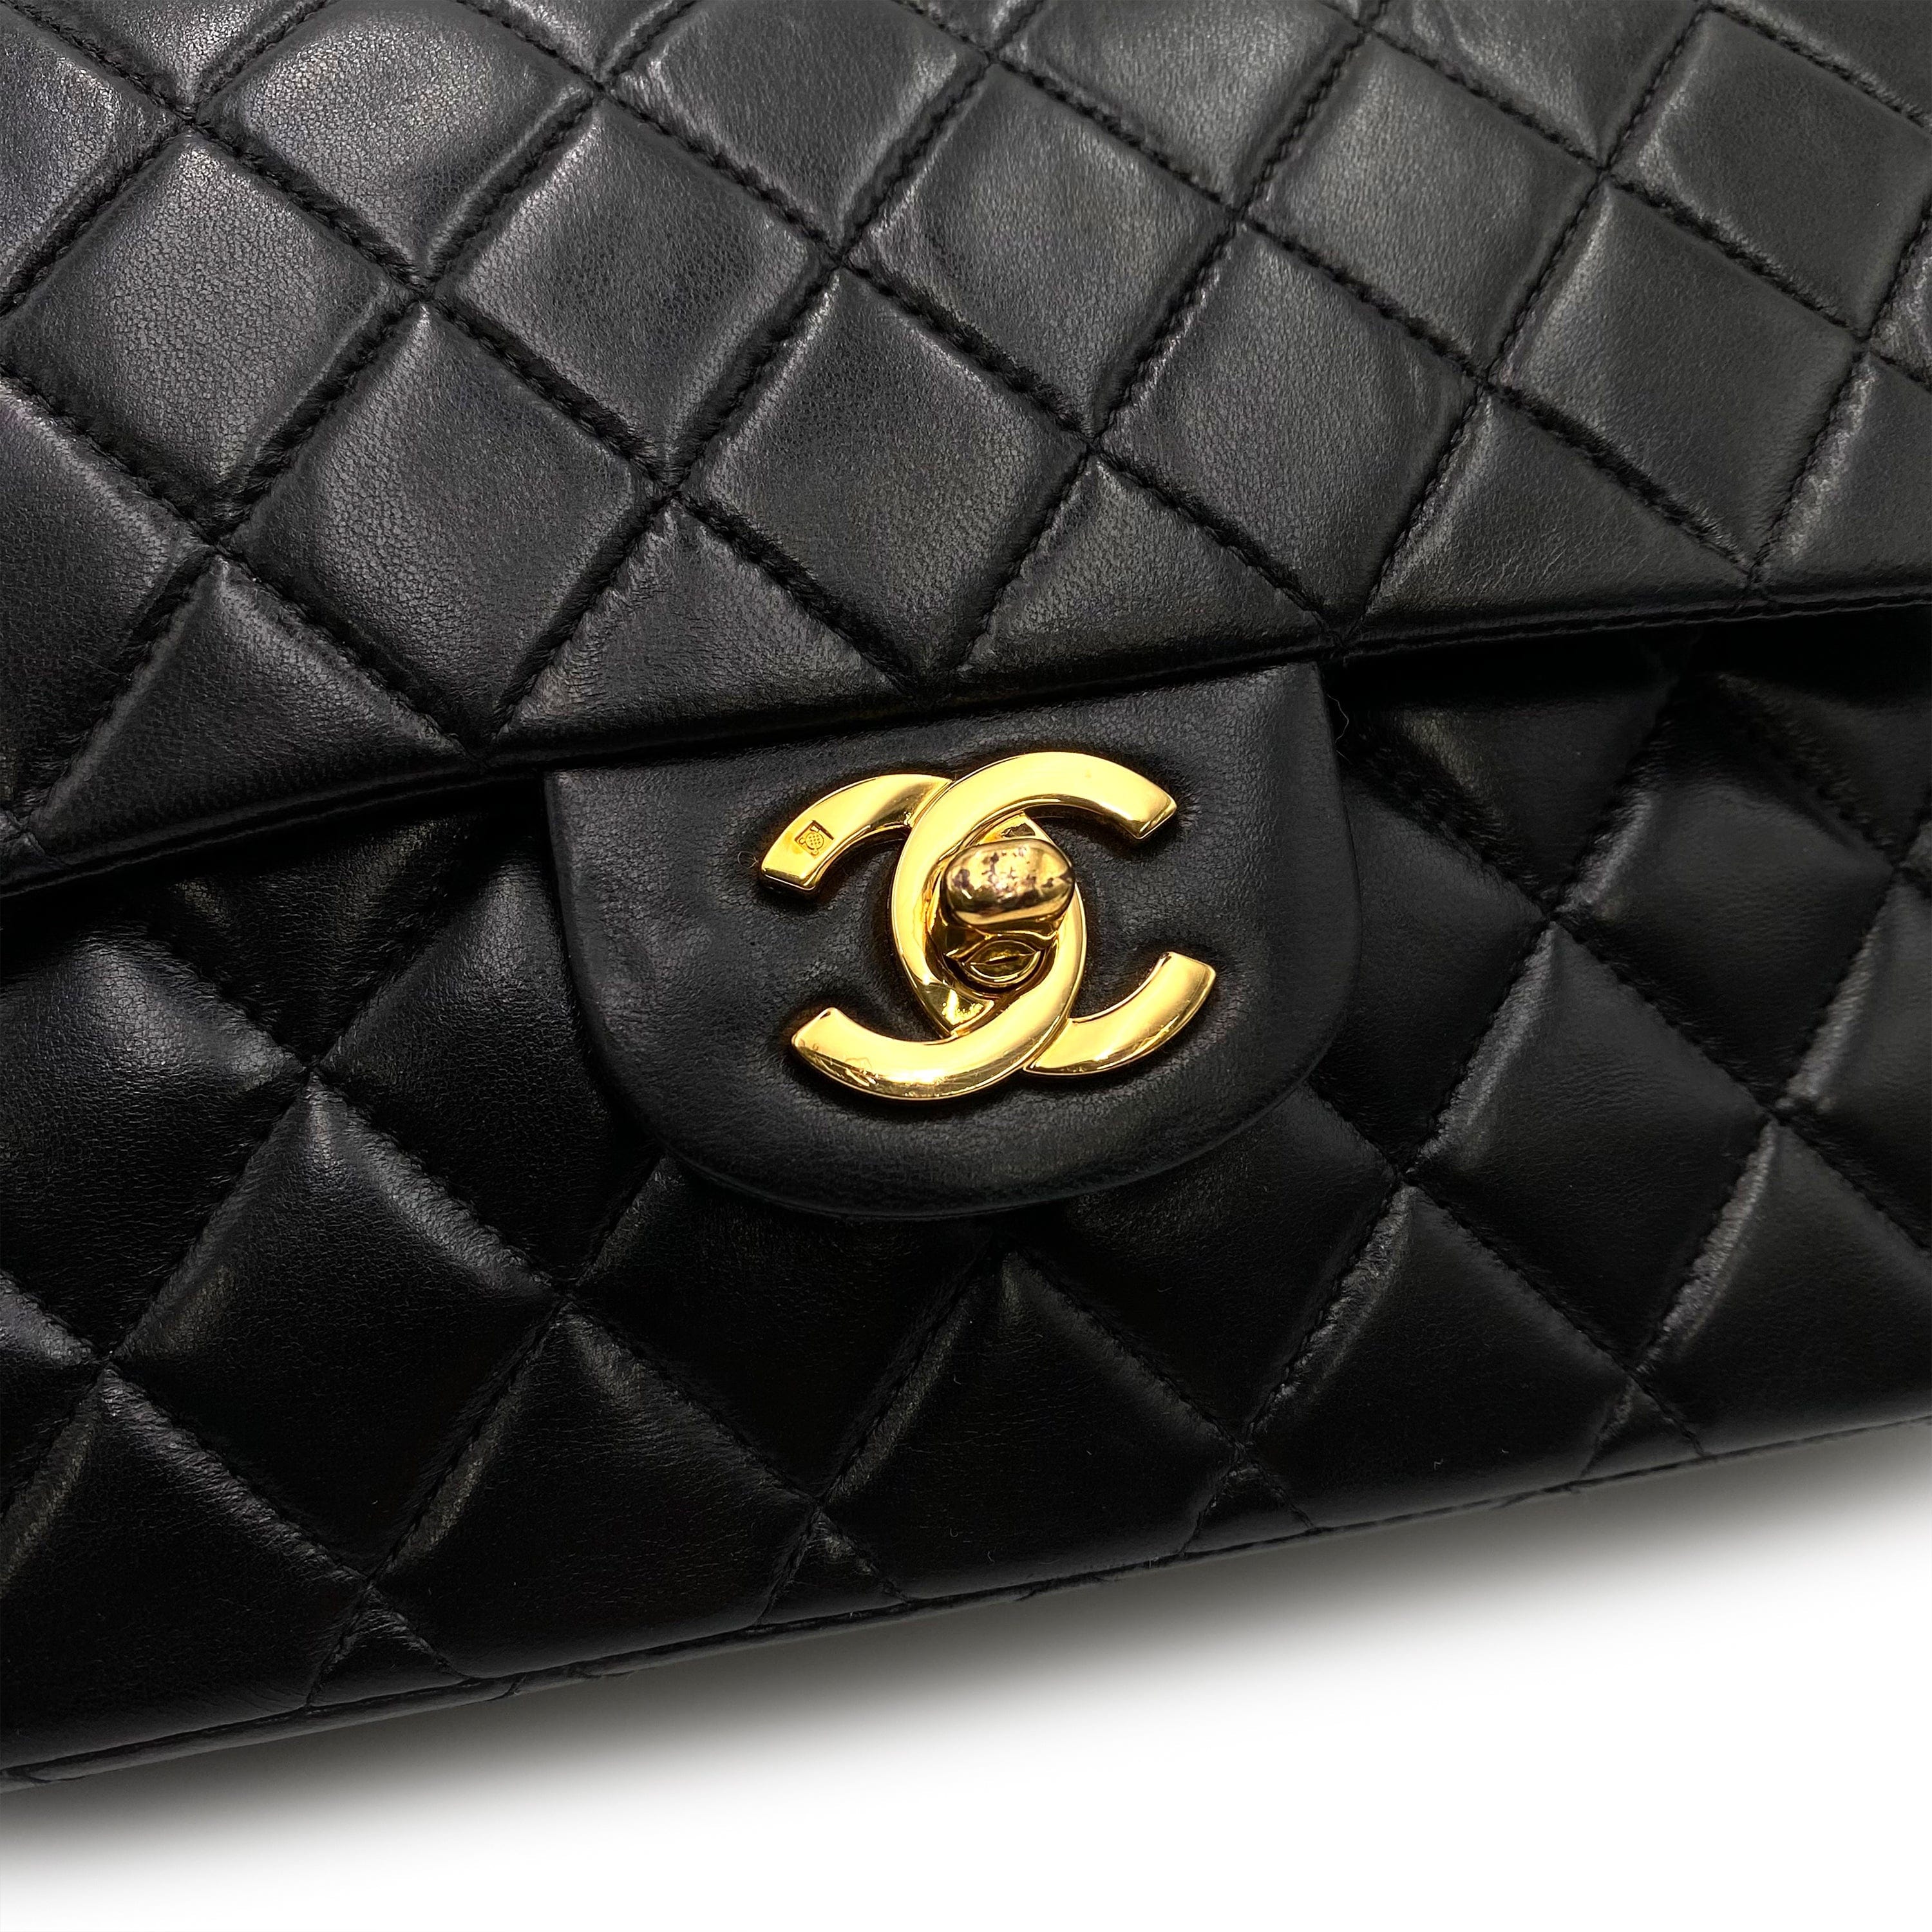 Chanel Chanel Vintage Classic Flap Medium Black Lambskin GHW #6 90226796